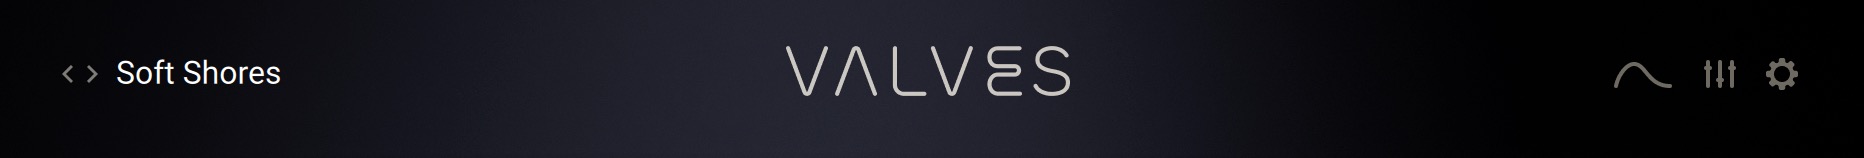 Valves_Browser_Close.jpg